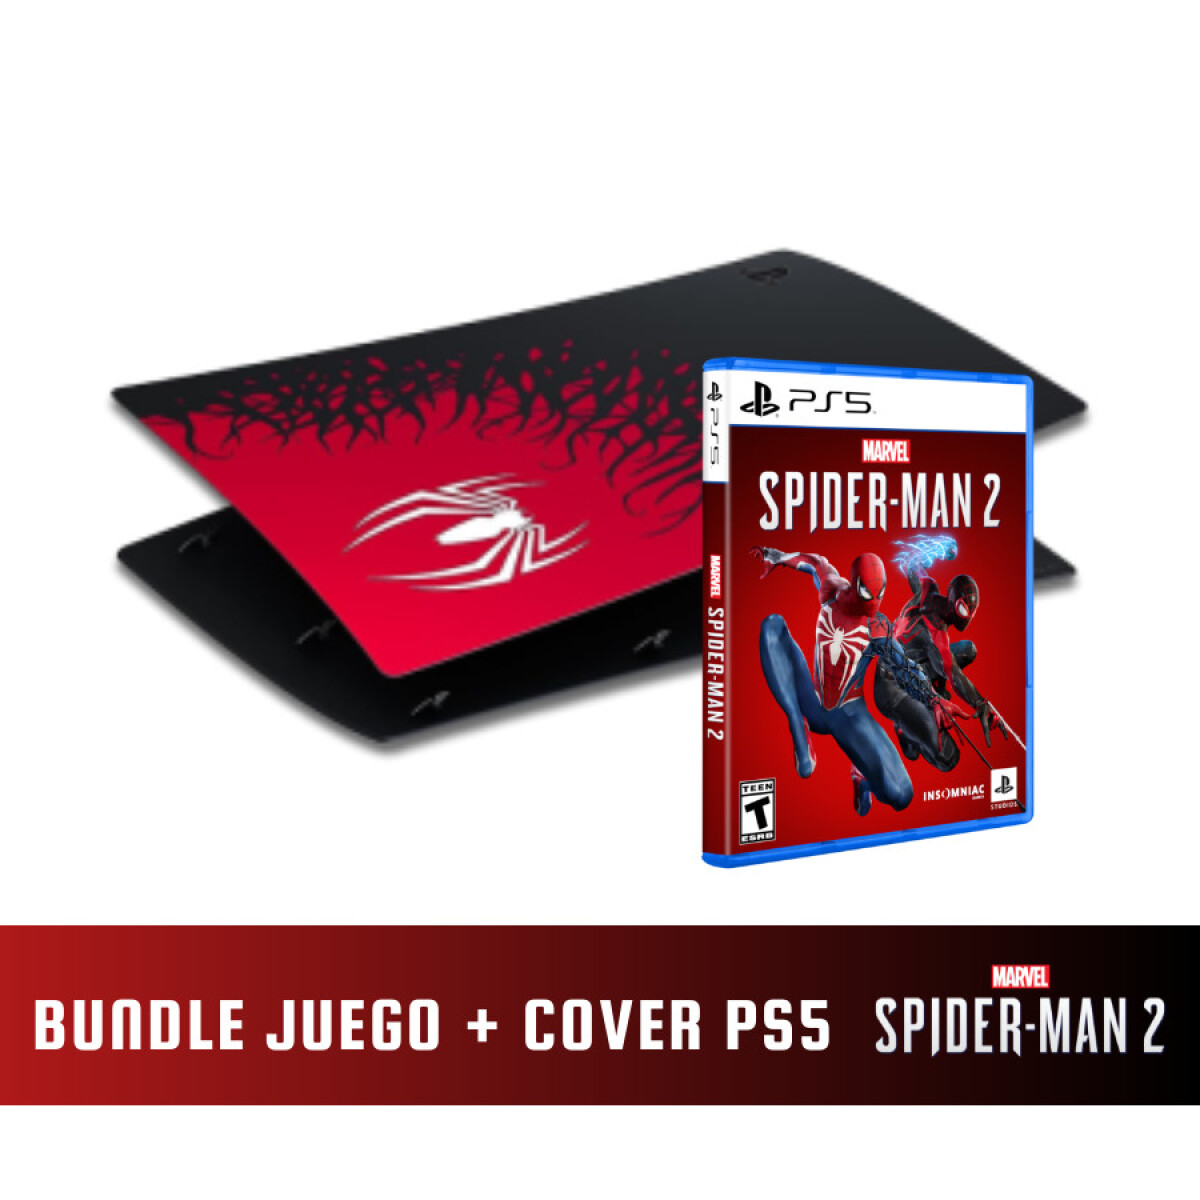 BUNDLE SPIDERMAN 2 PS5 + COVER (STANDAR) PS5 